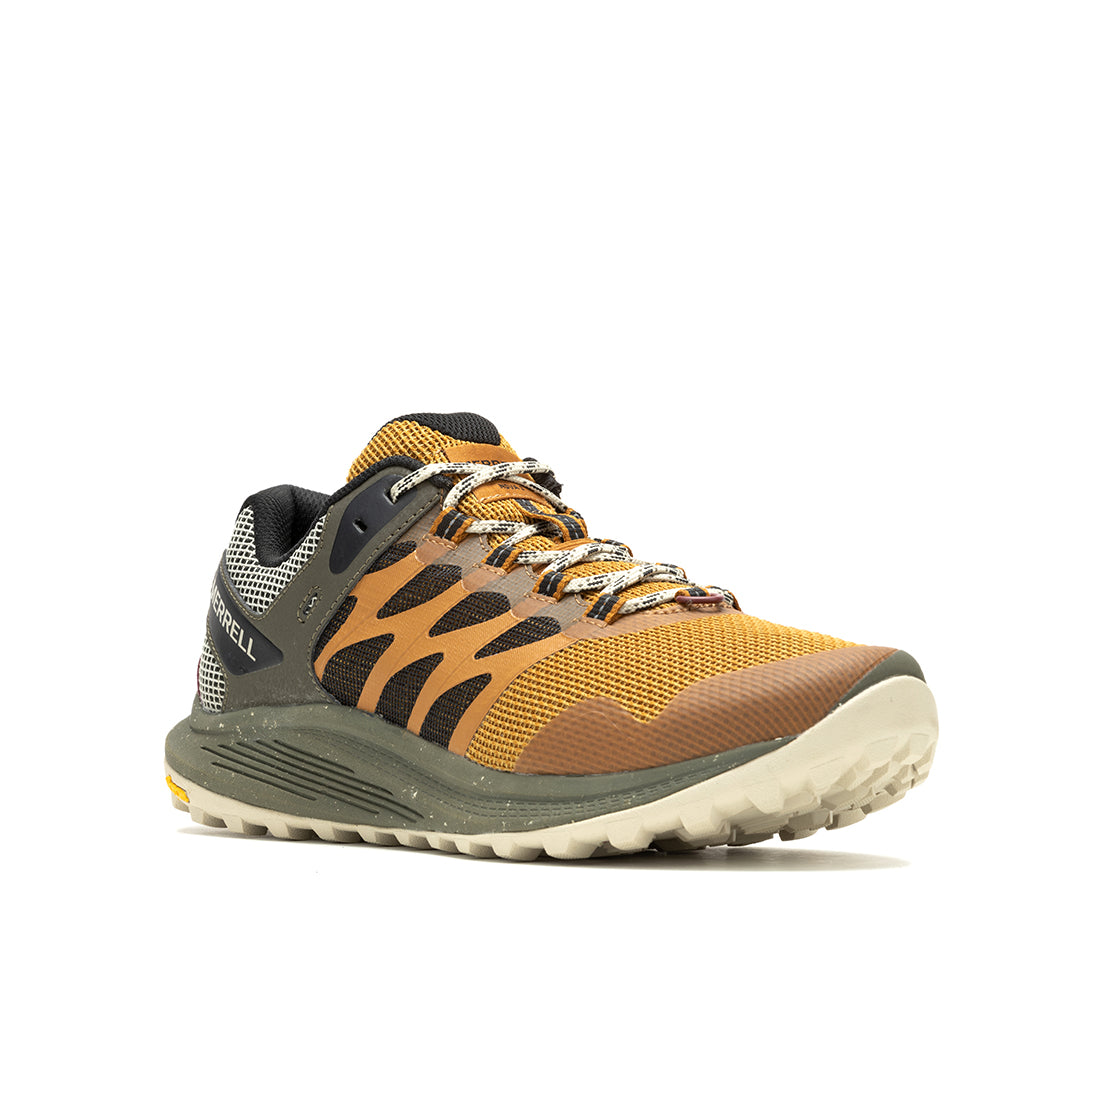 Nova 3-Spice/Amber Mens Trail Running Shoes | Merrell Online Store